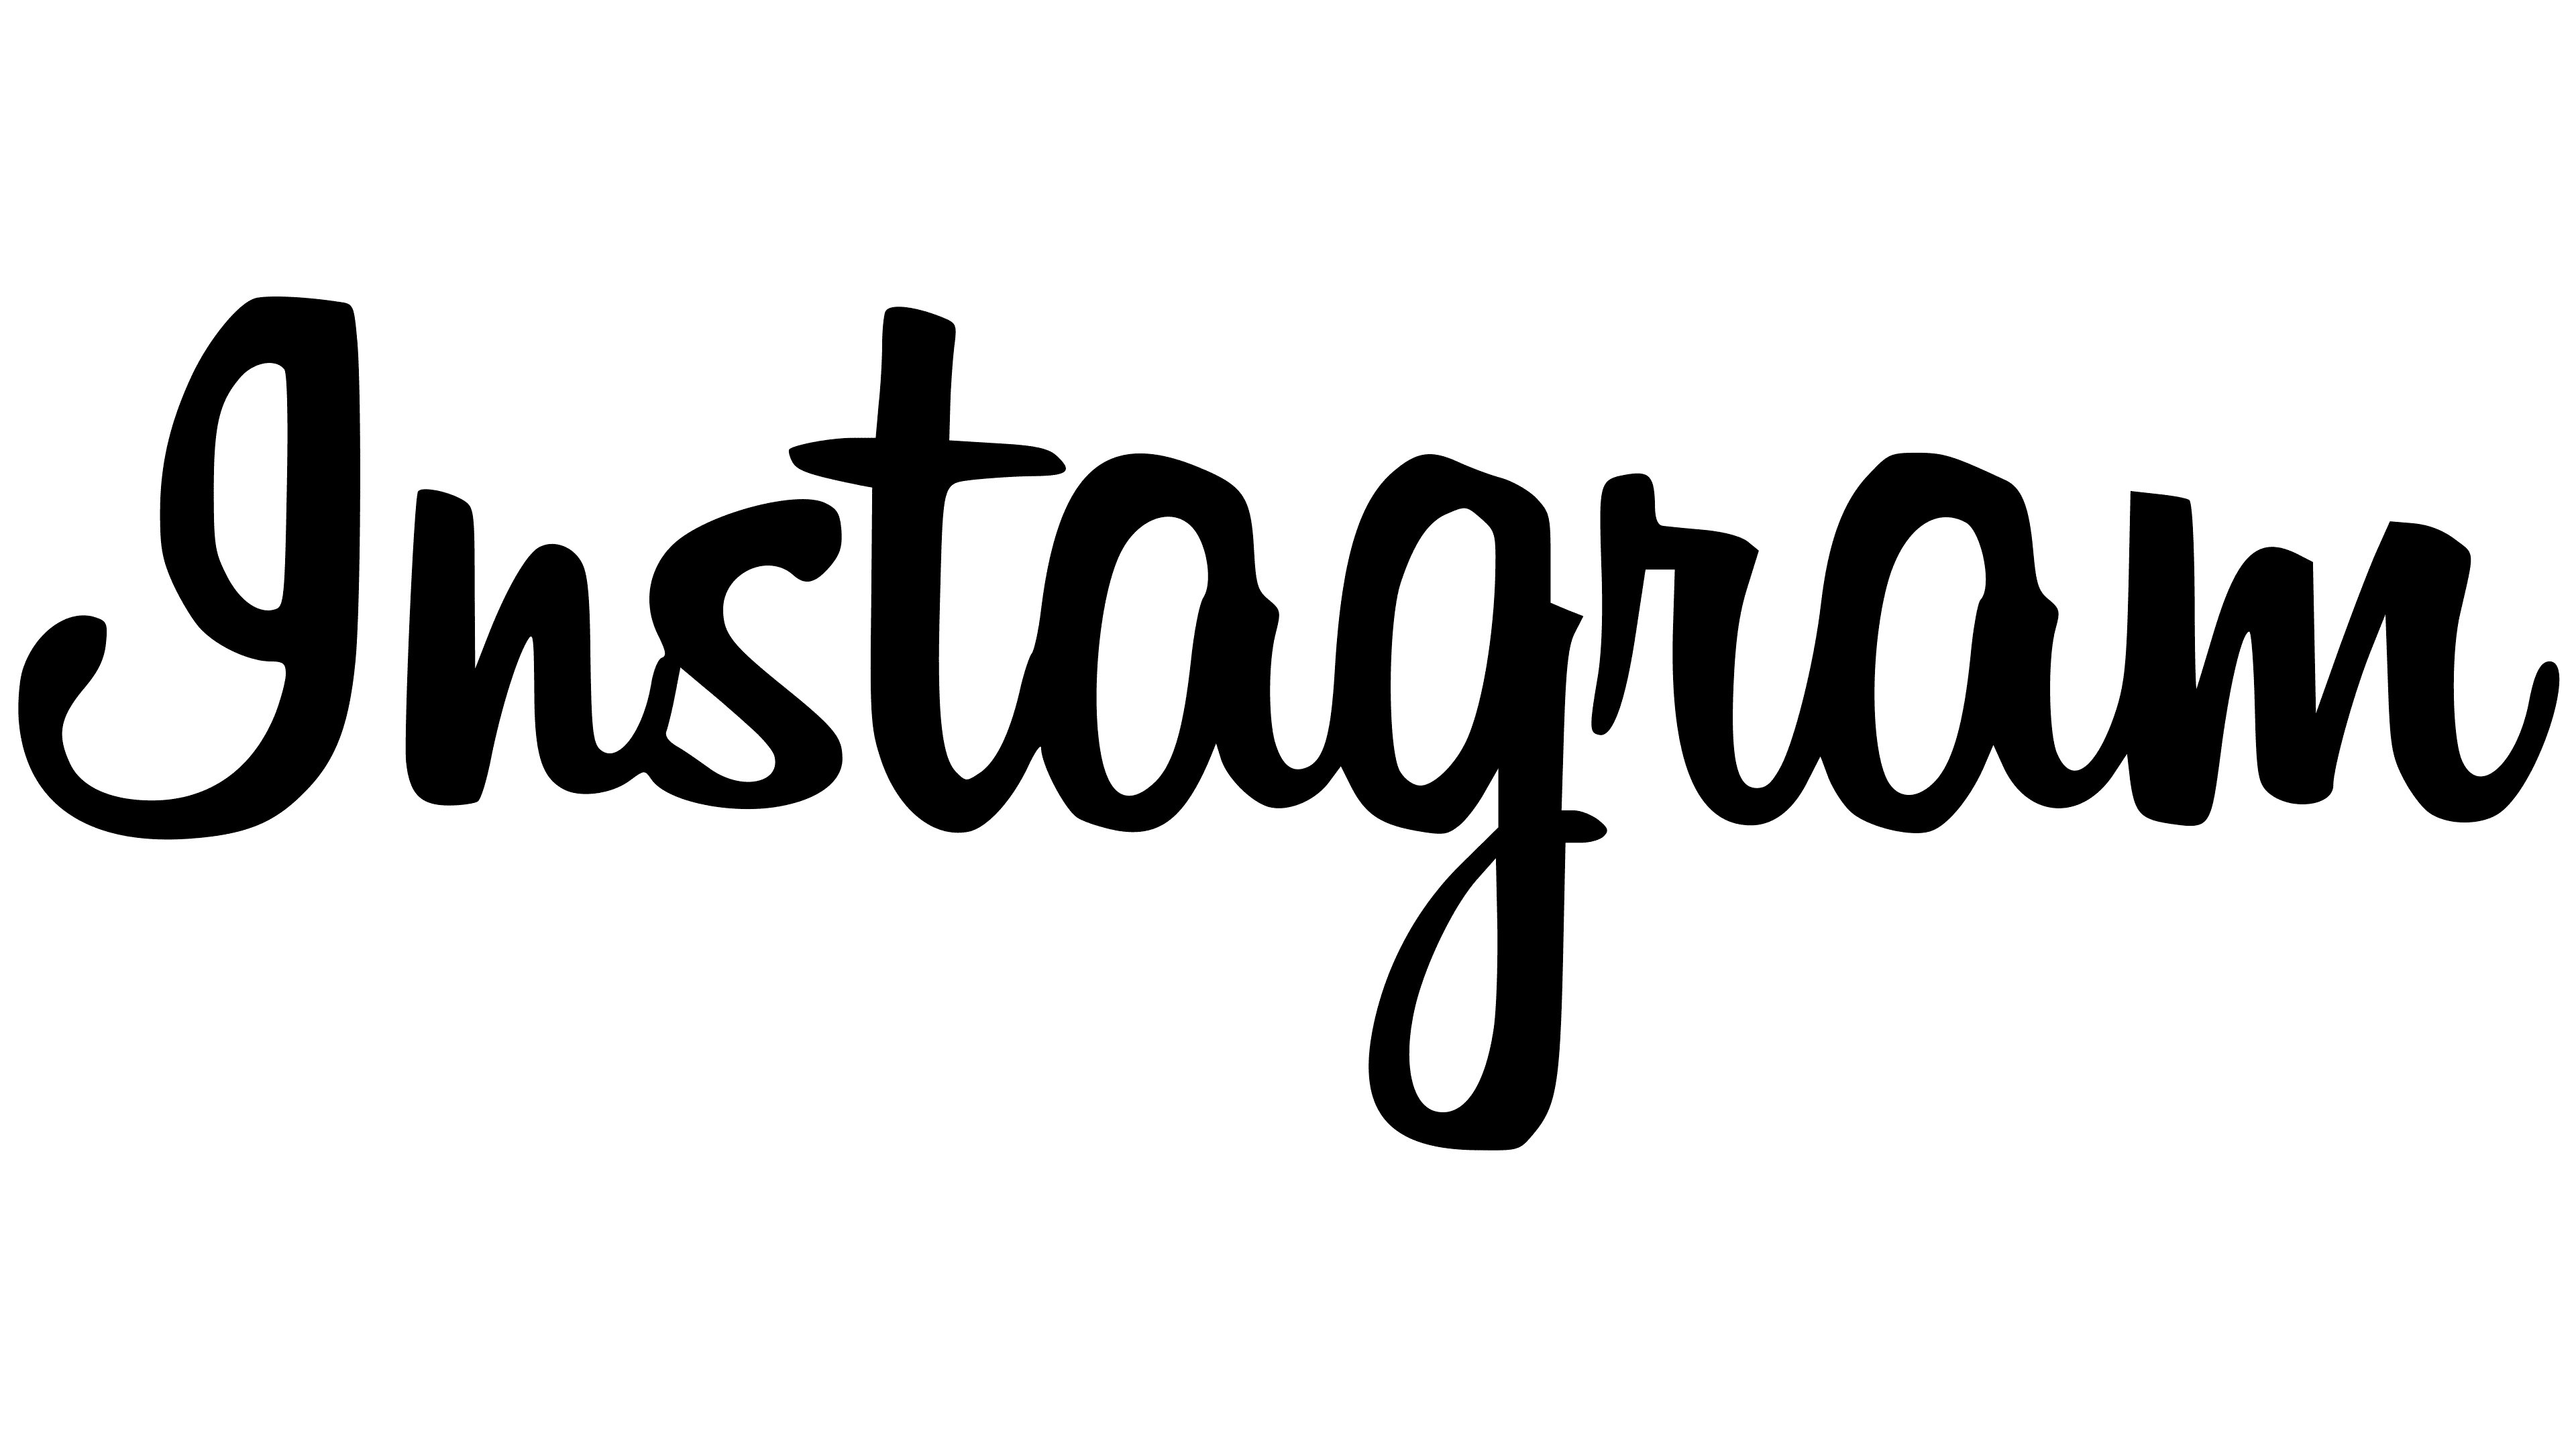 instagram logo font style free download